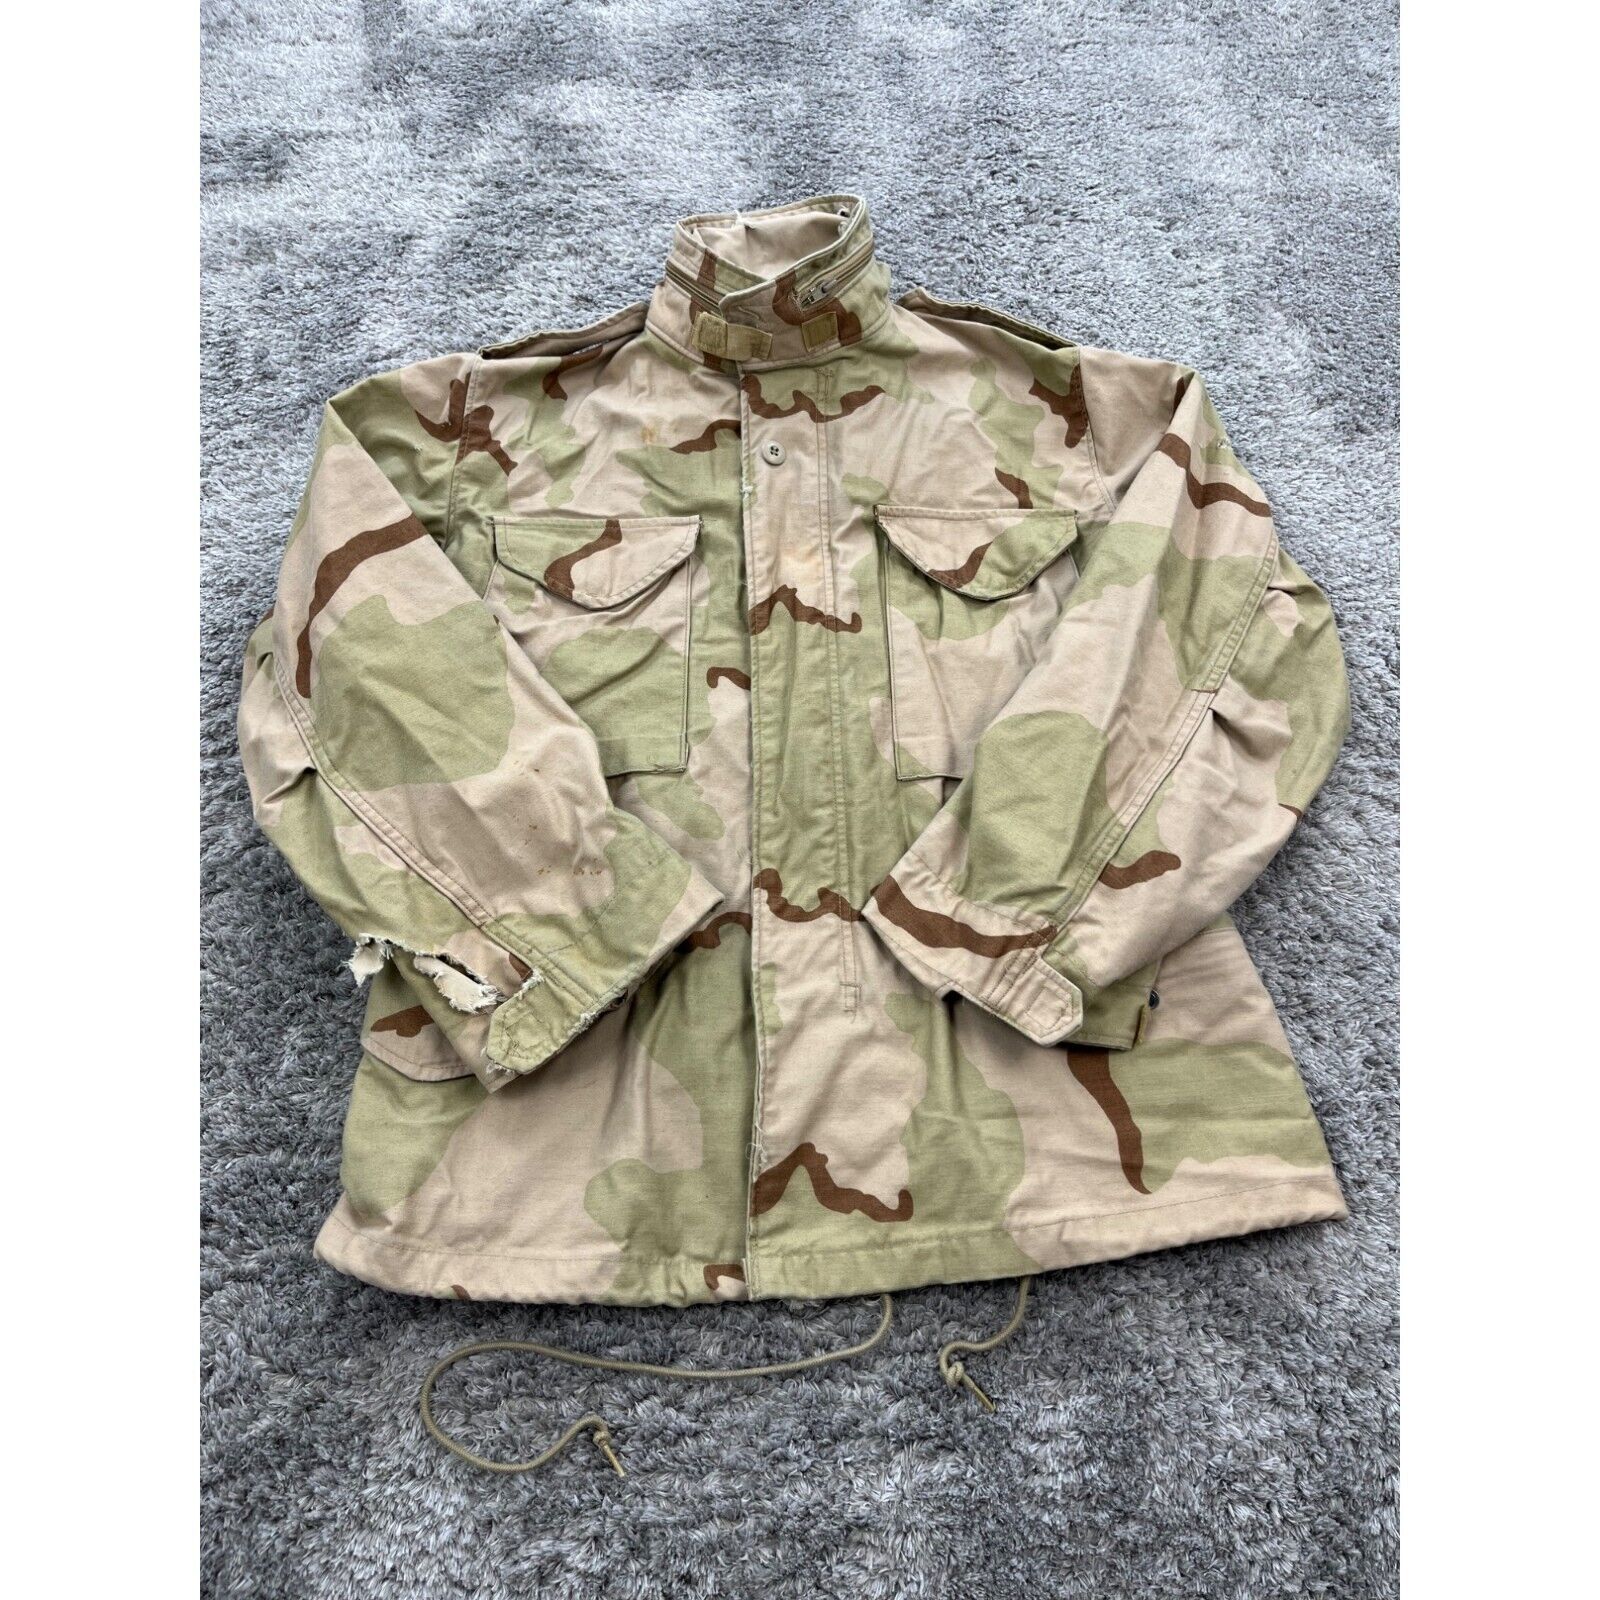 USGI Cold Weather Combat Coat Mens Small Short Desert Camo Class 3 Field Jacket